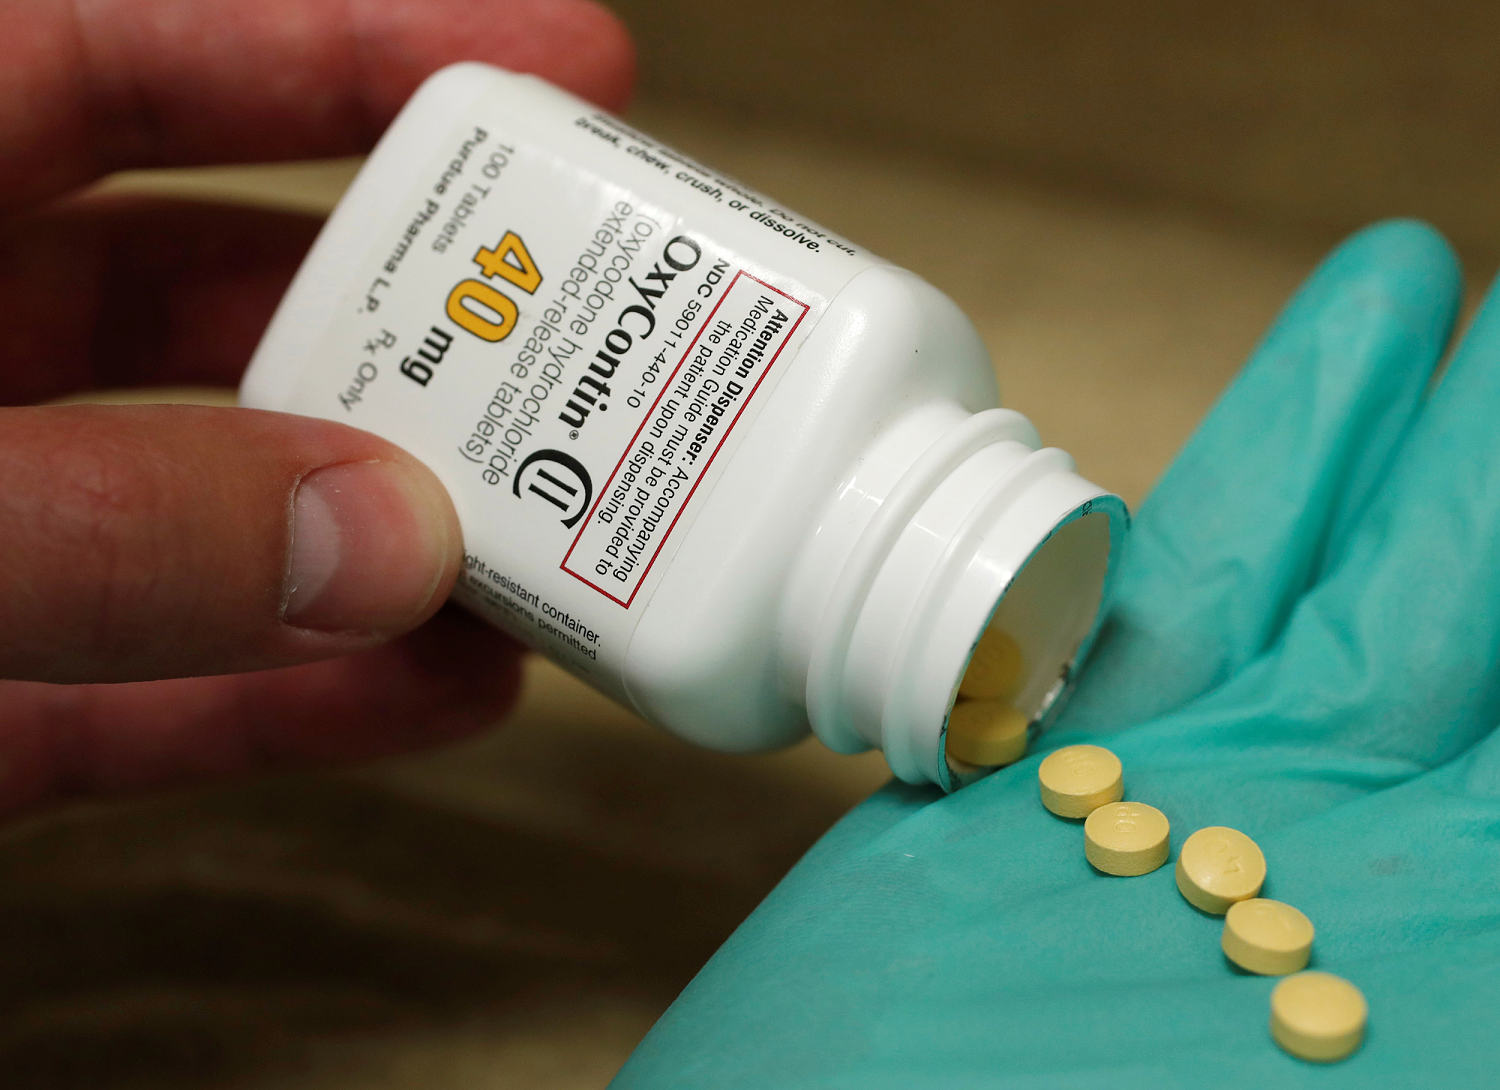 Supreme Court blocks Purdue Pharma opioid settlement, threatening billions of dollars for victims